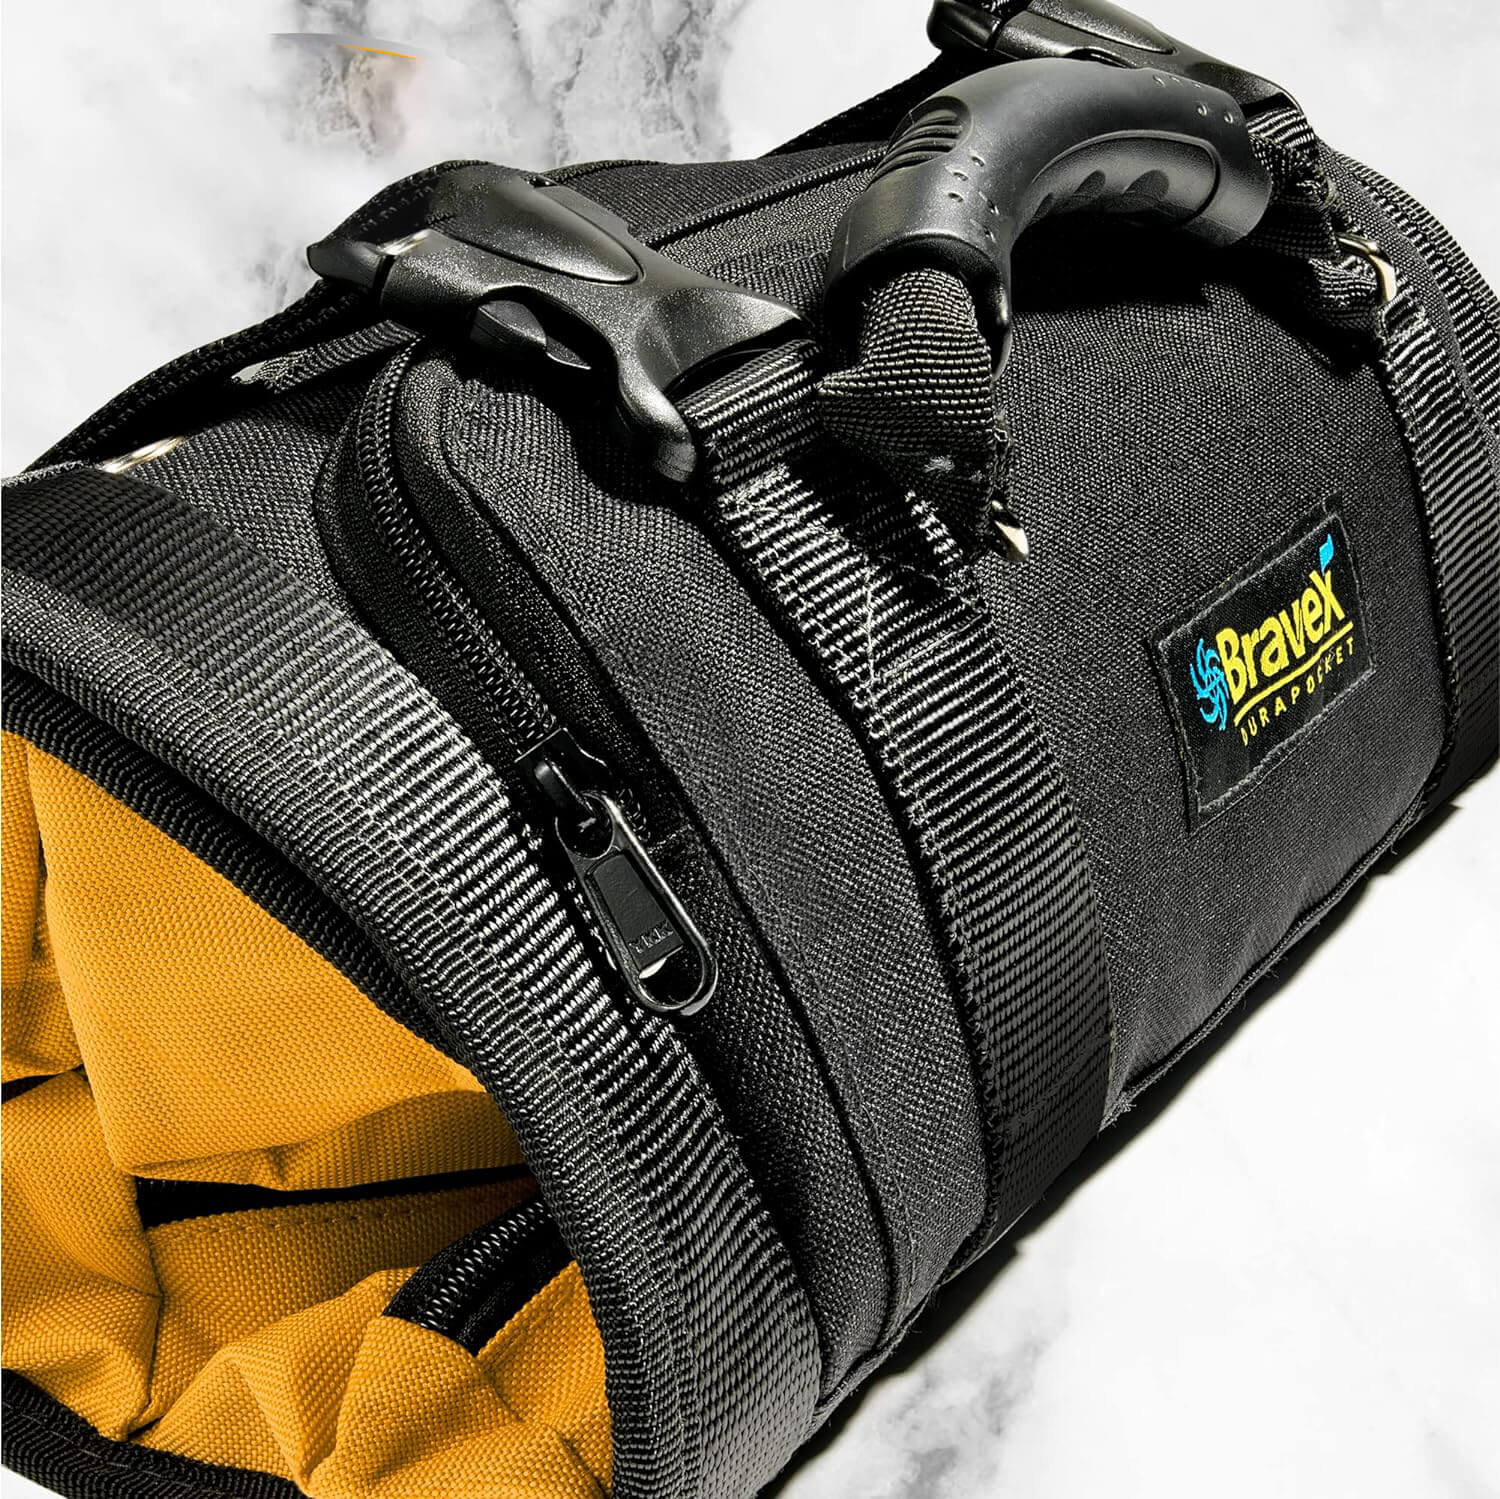 Pahal Nylon Tool Bag (Black, 16 inch) : Amazon.in: Home Improvement